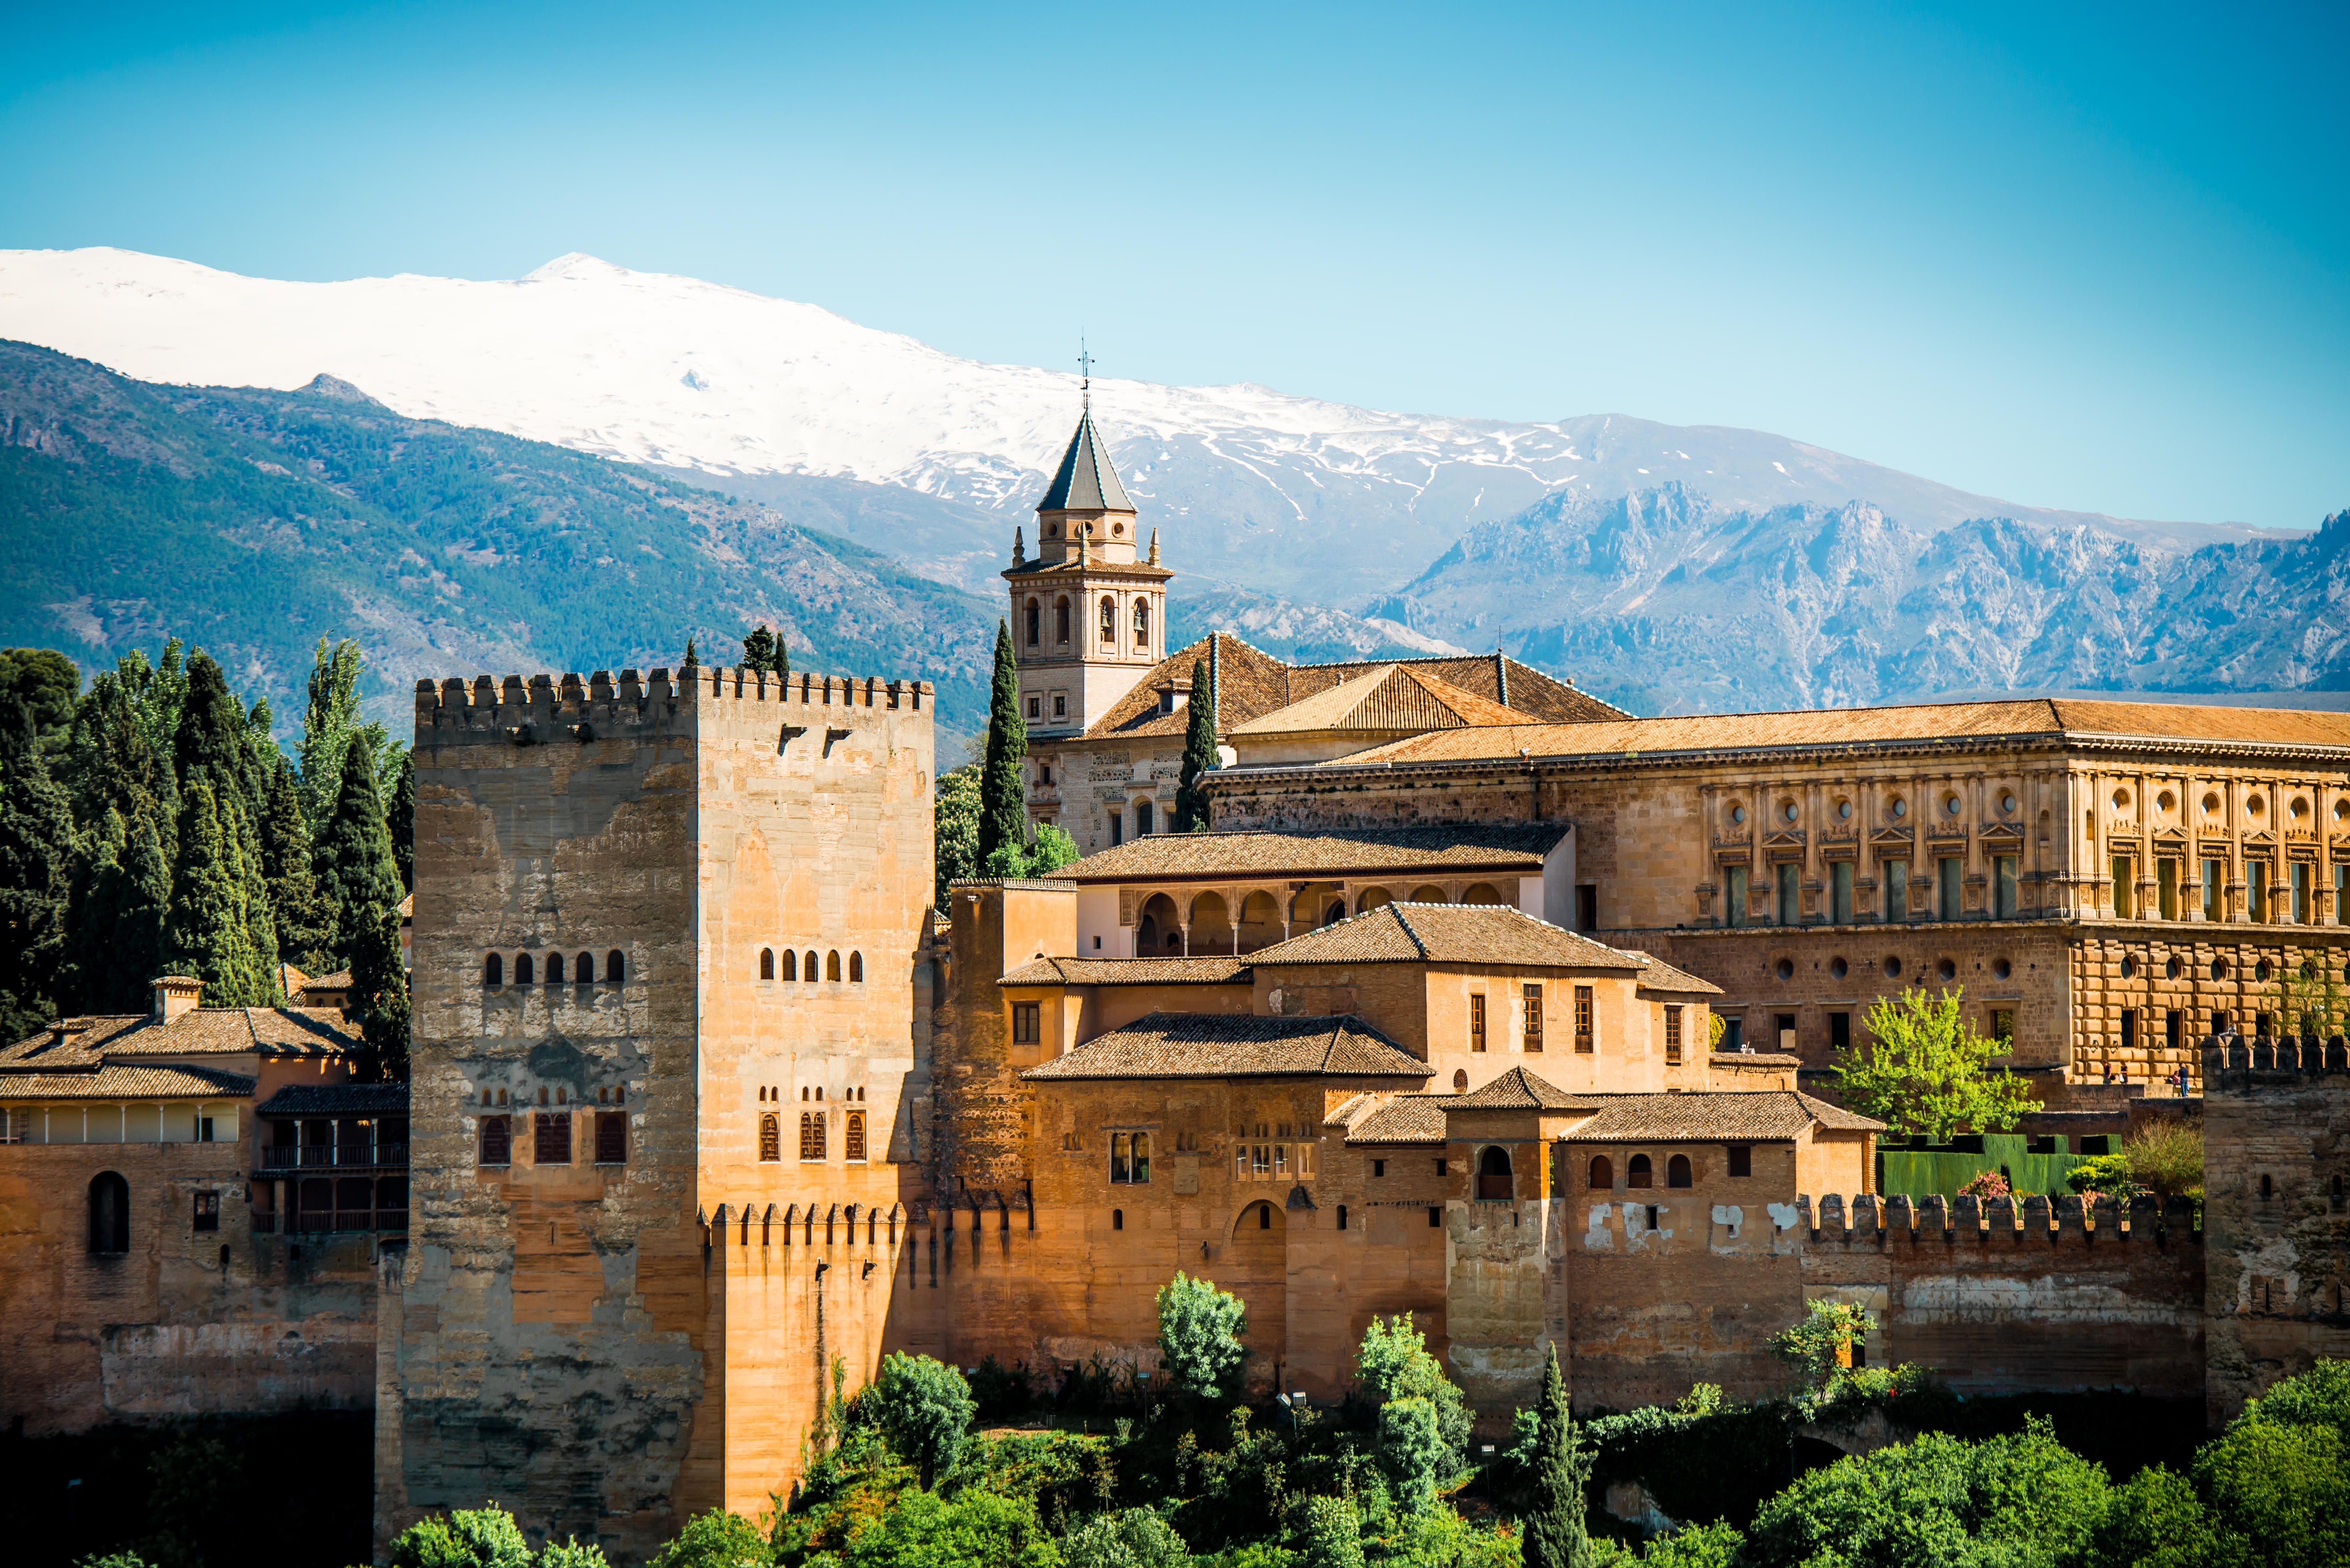 Alhambra, Granada Cathedral & Royal Chapel Tour Tickets, Granada